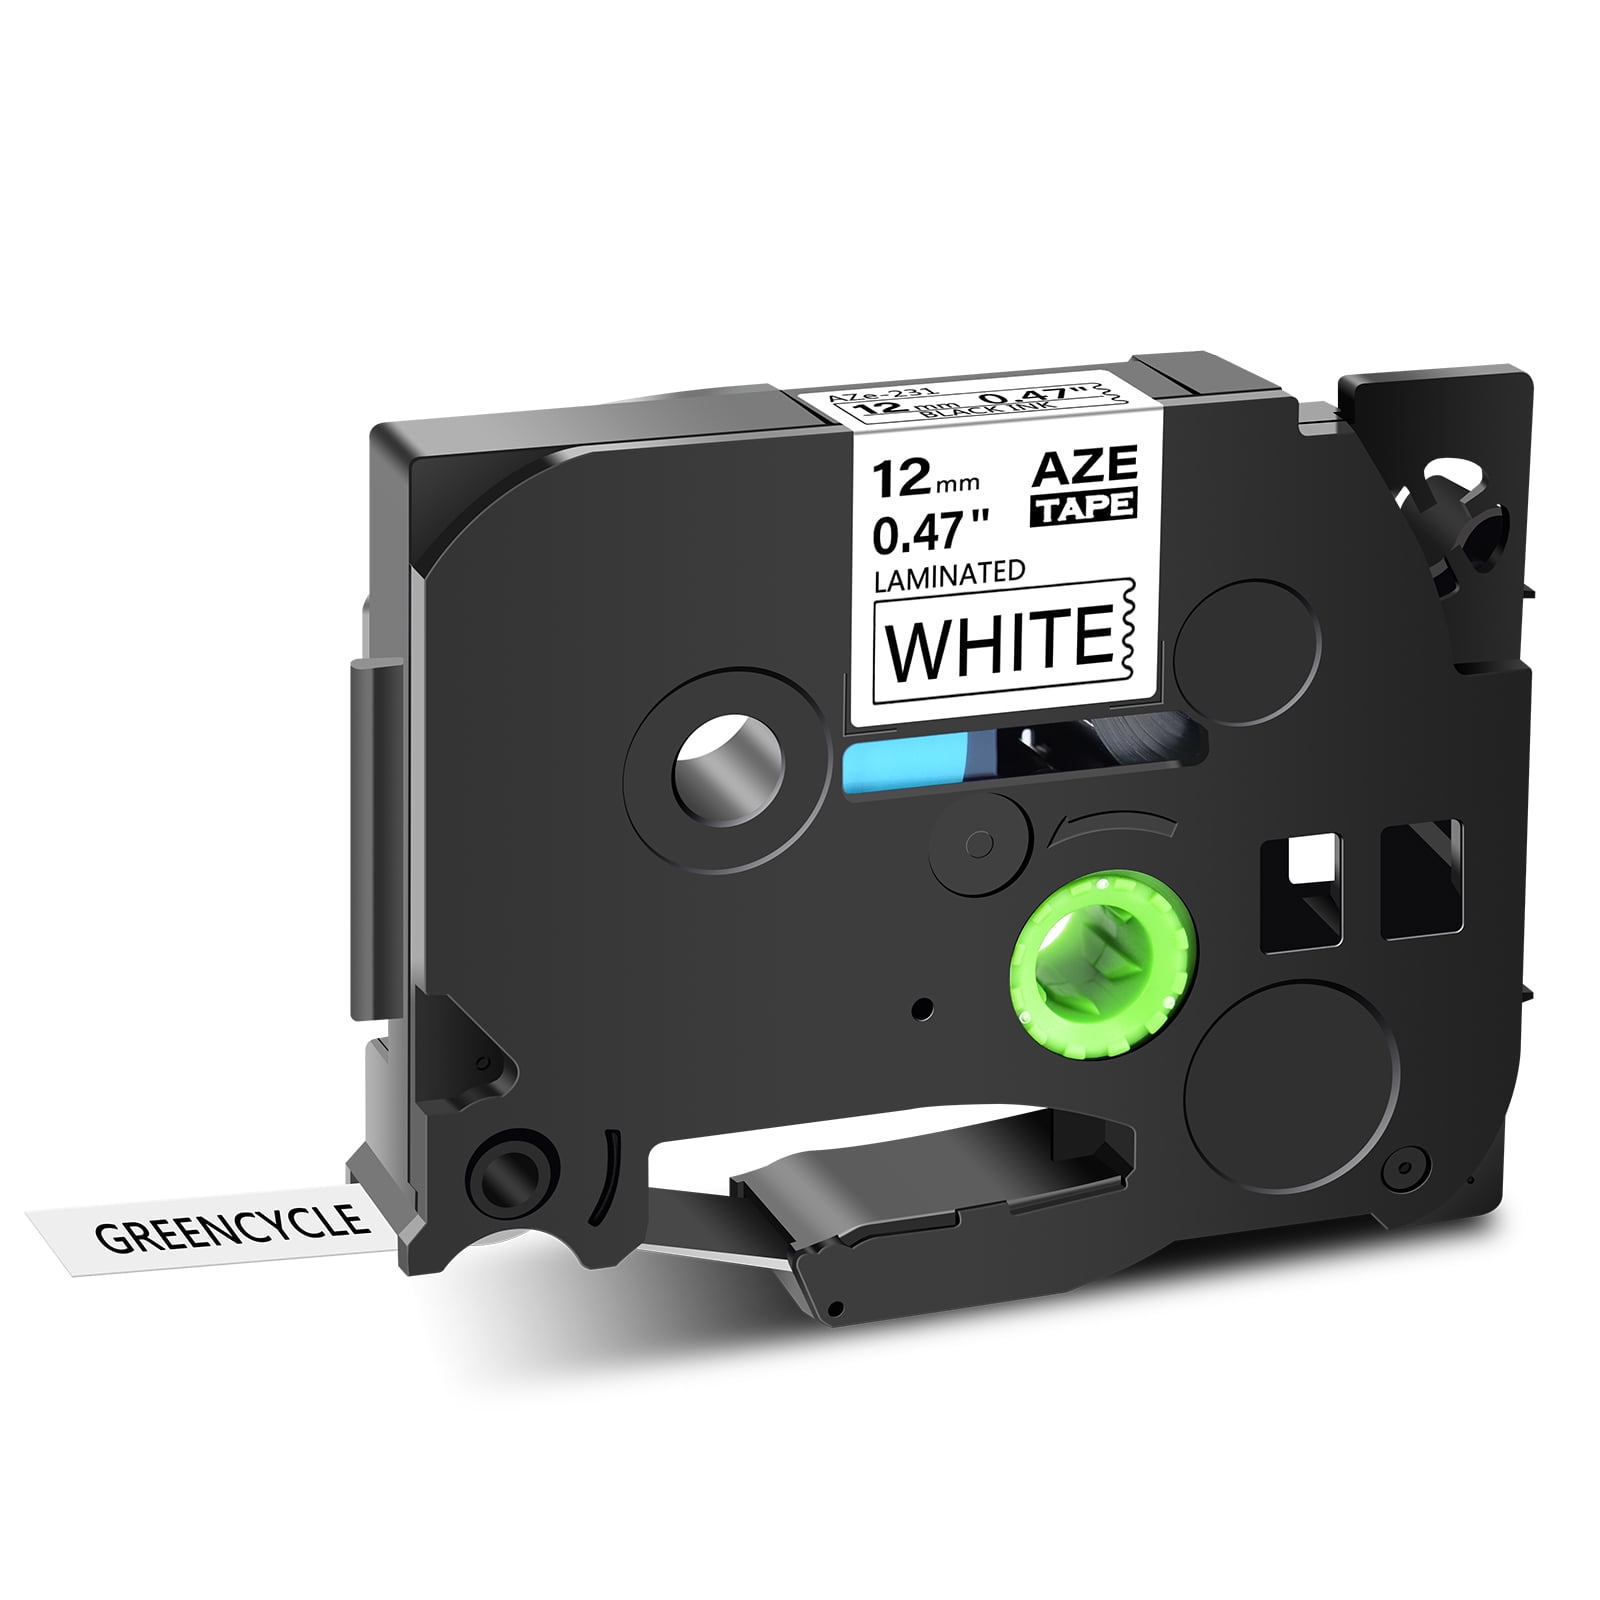 3PK Label tape For Brother P-Touch PT-E300 H300 TZ-231 TZe-231 Black on White